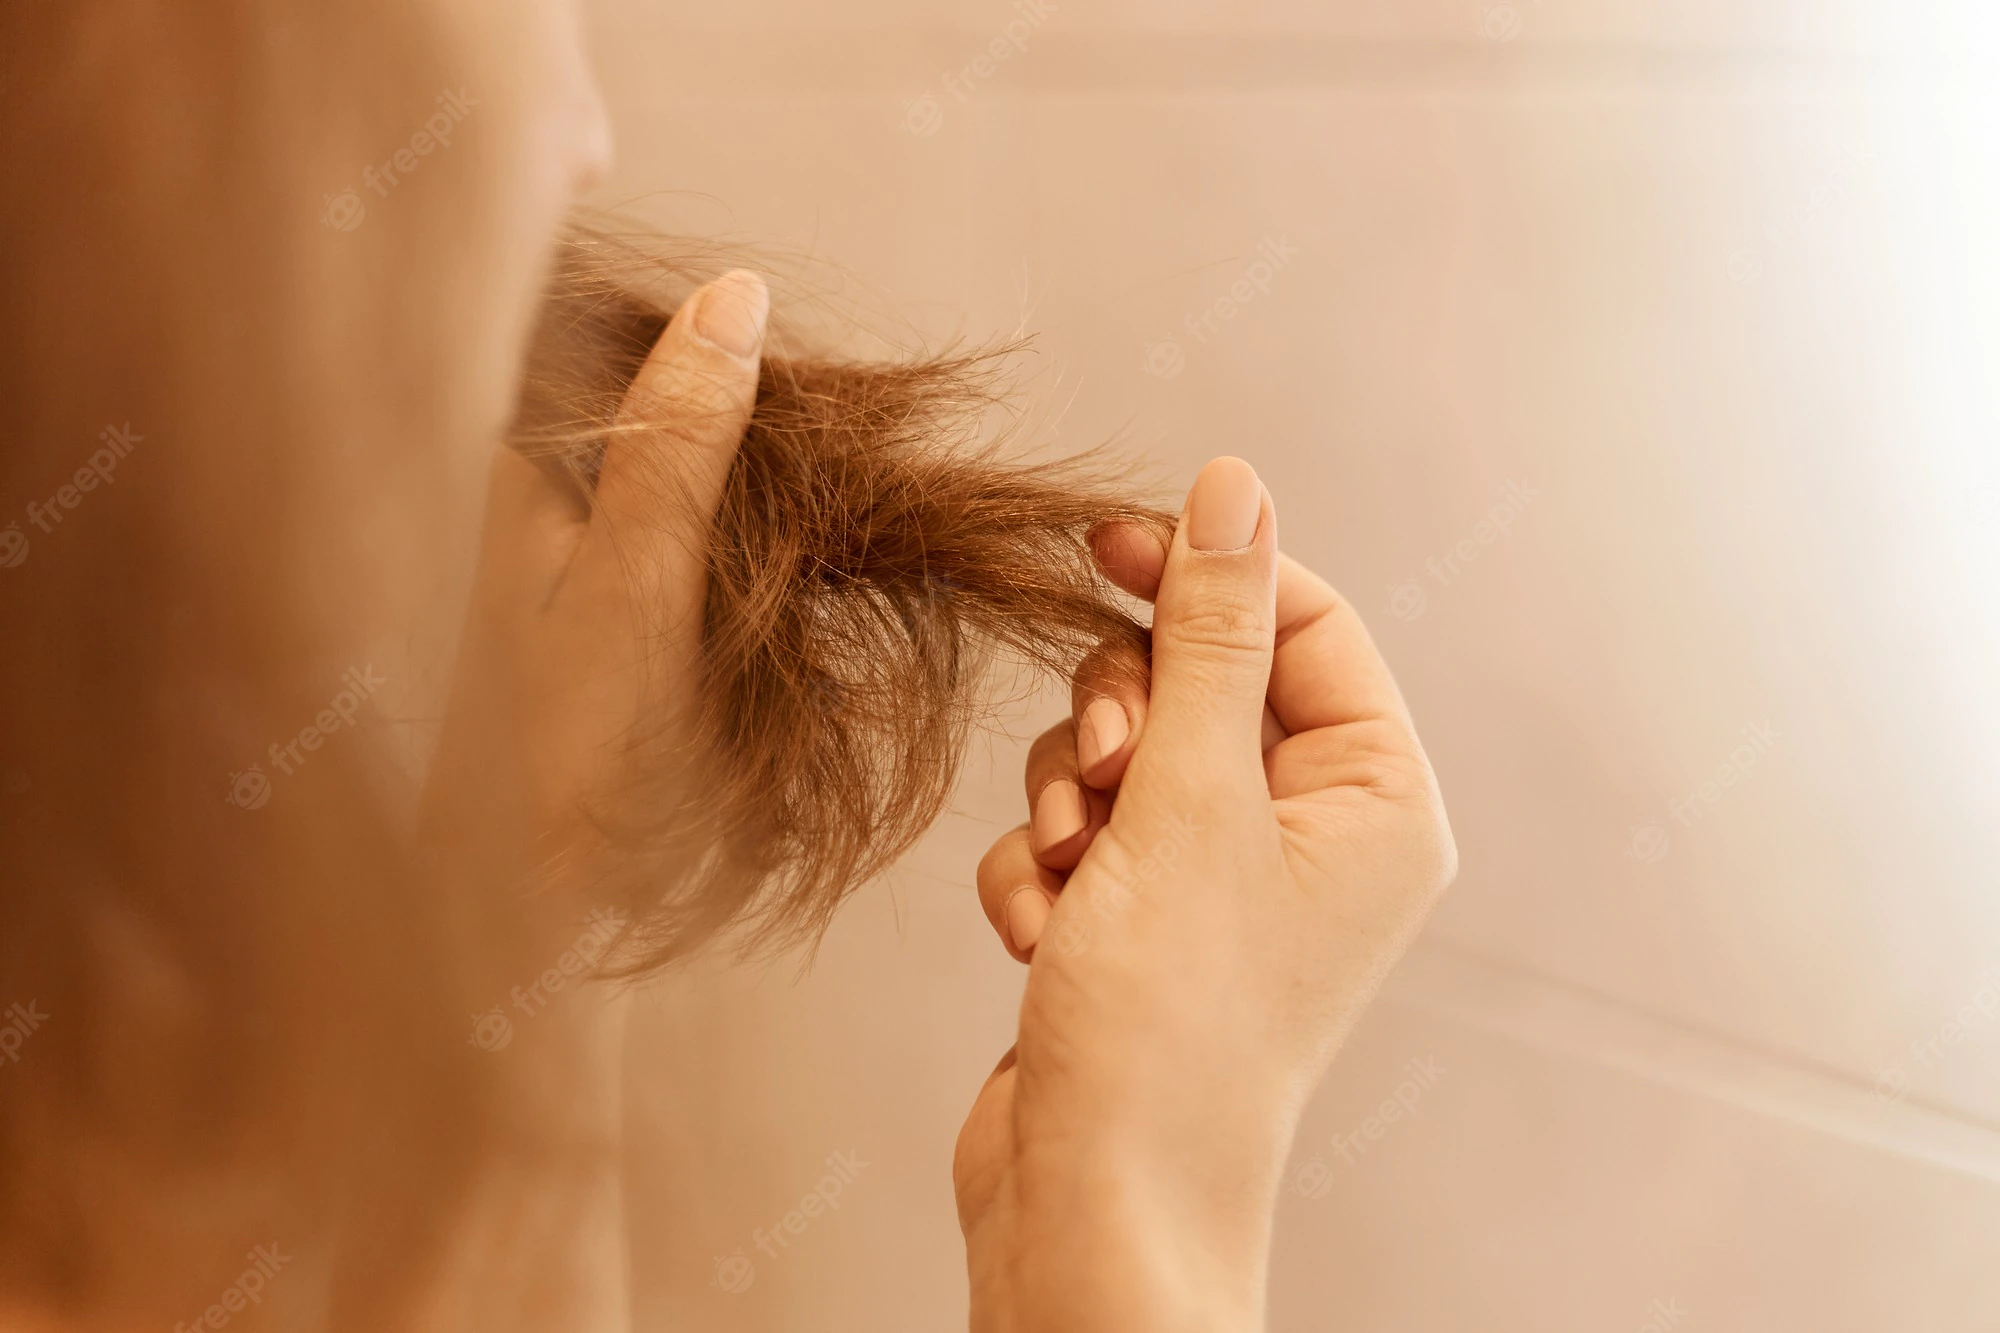 does clomid cause hair loss